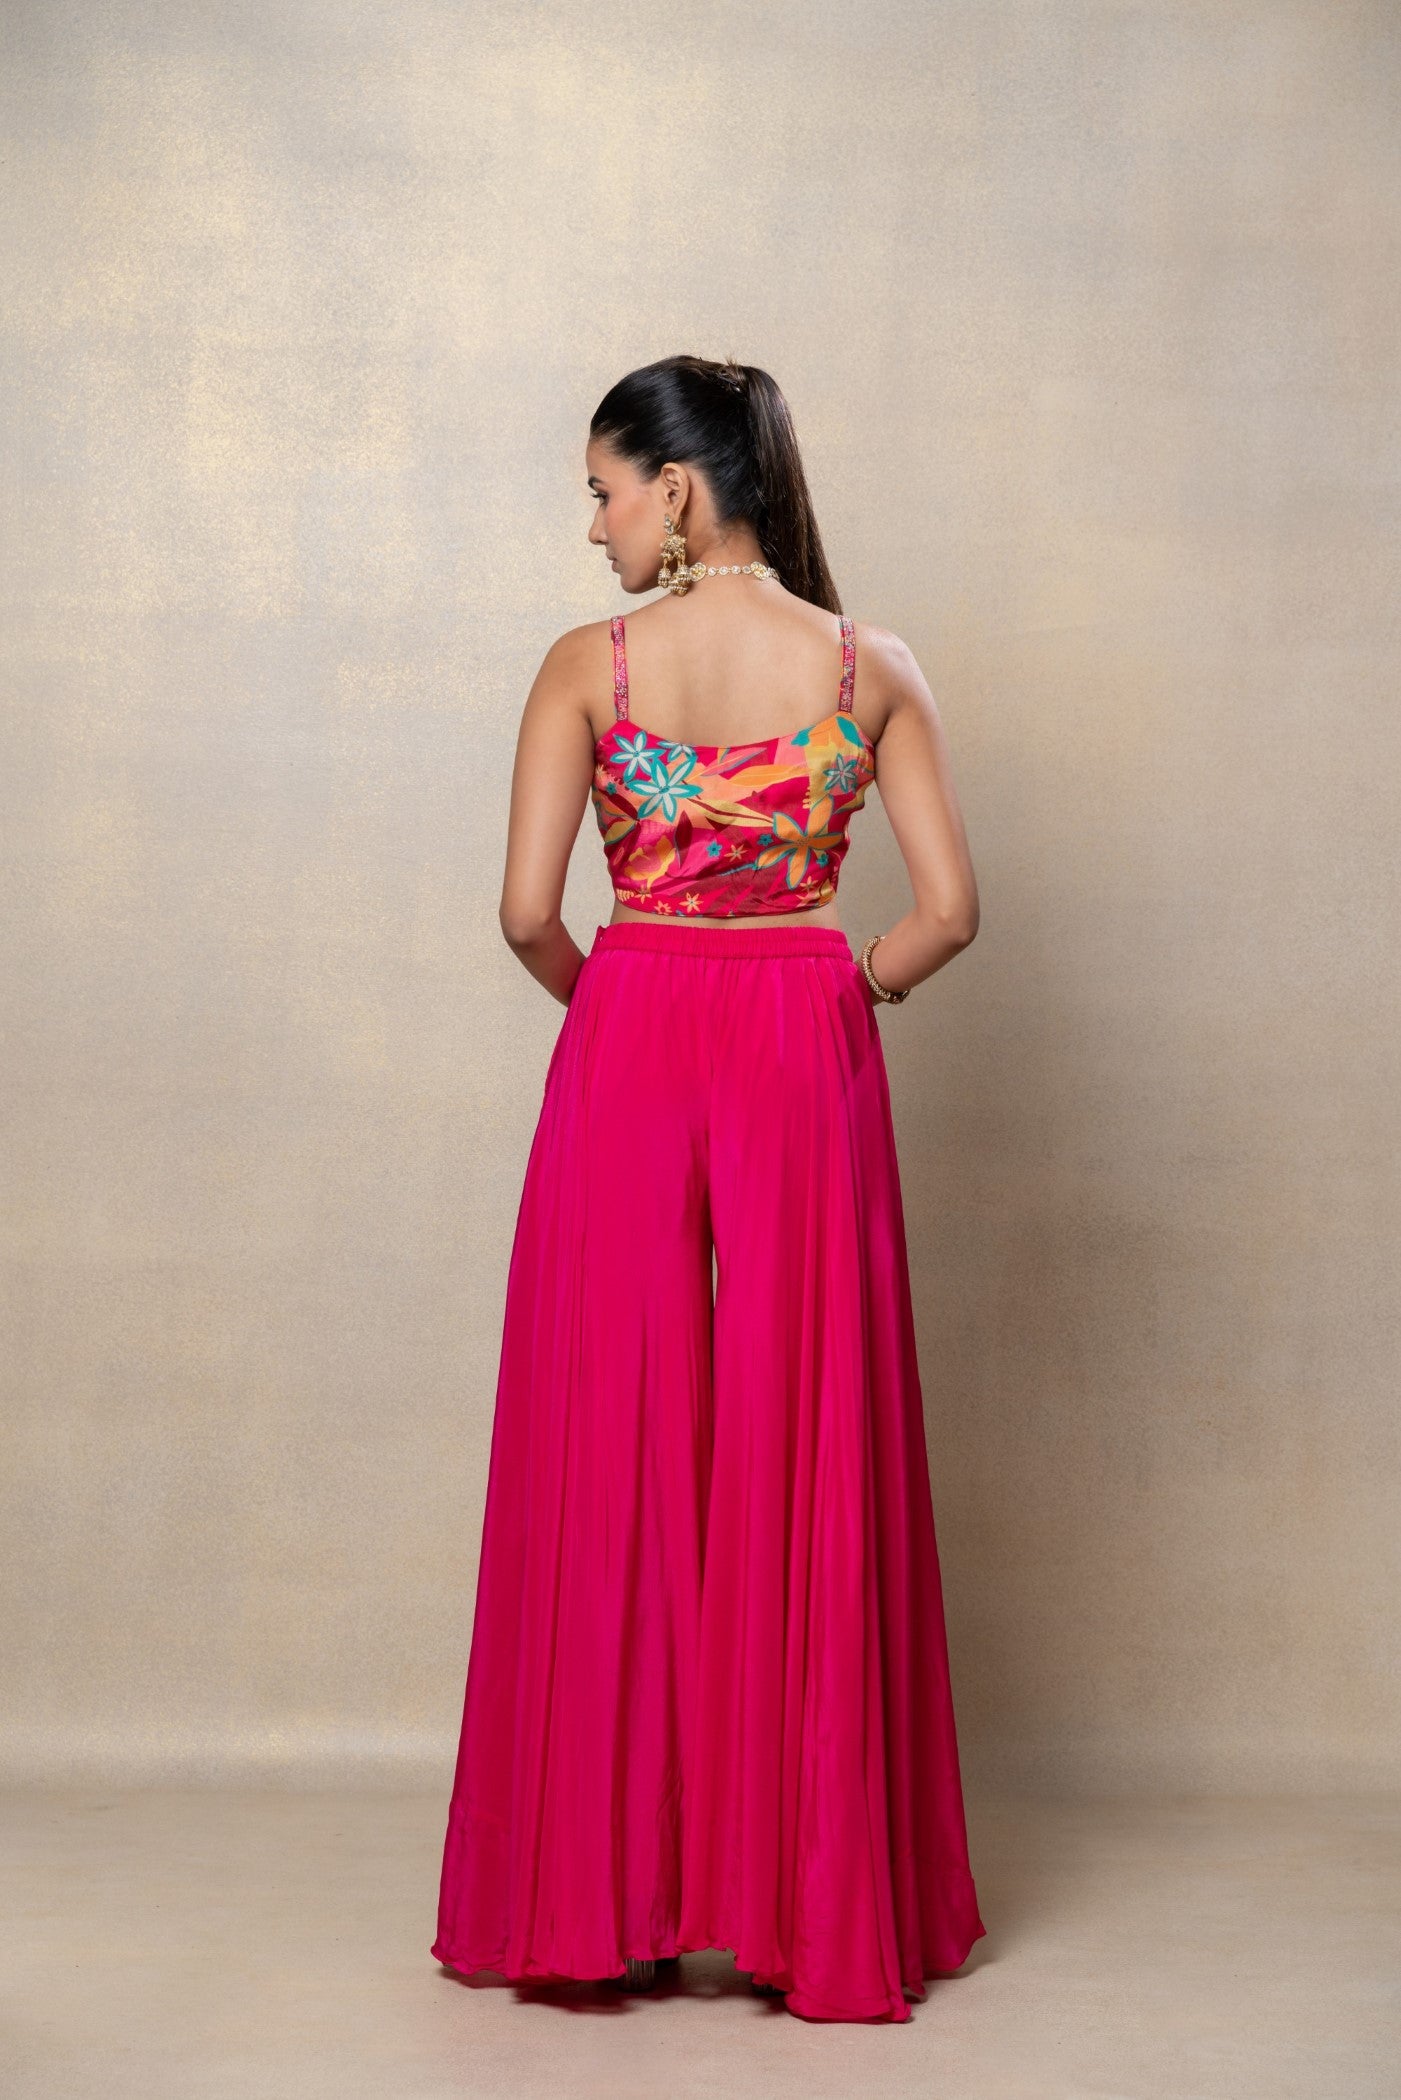 Deep pink soft silk sequinned indo-western set